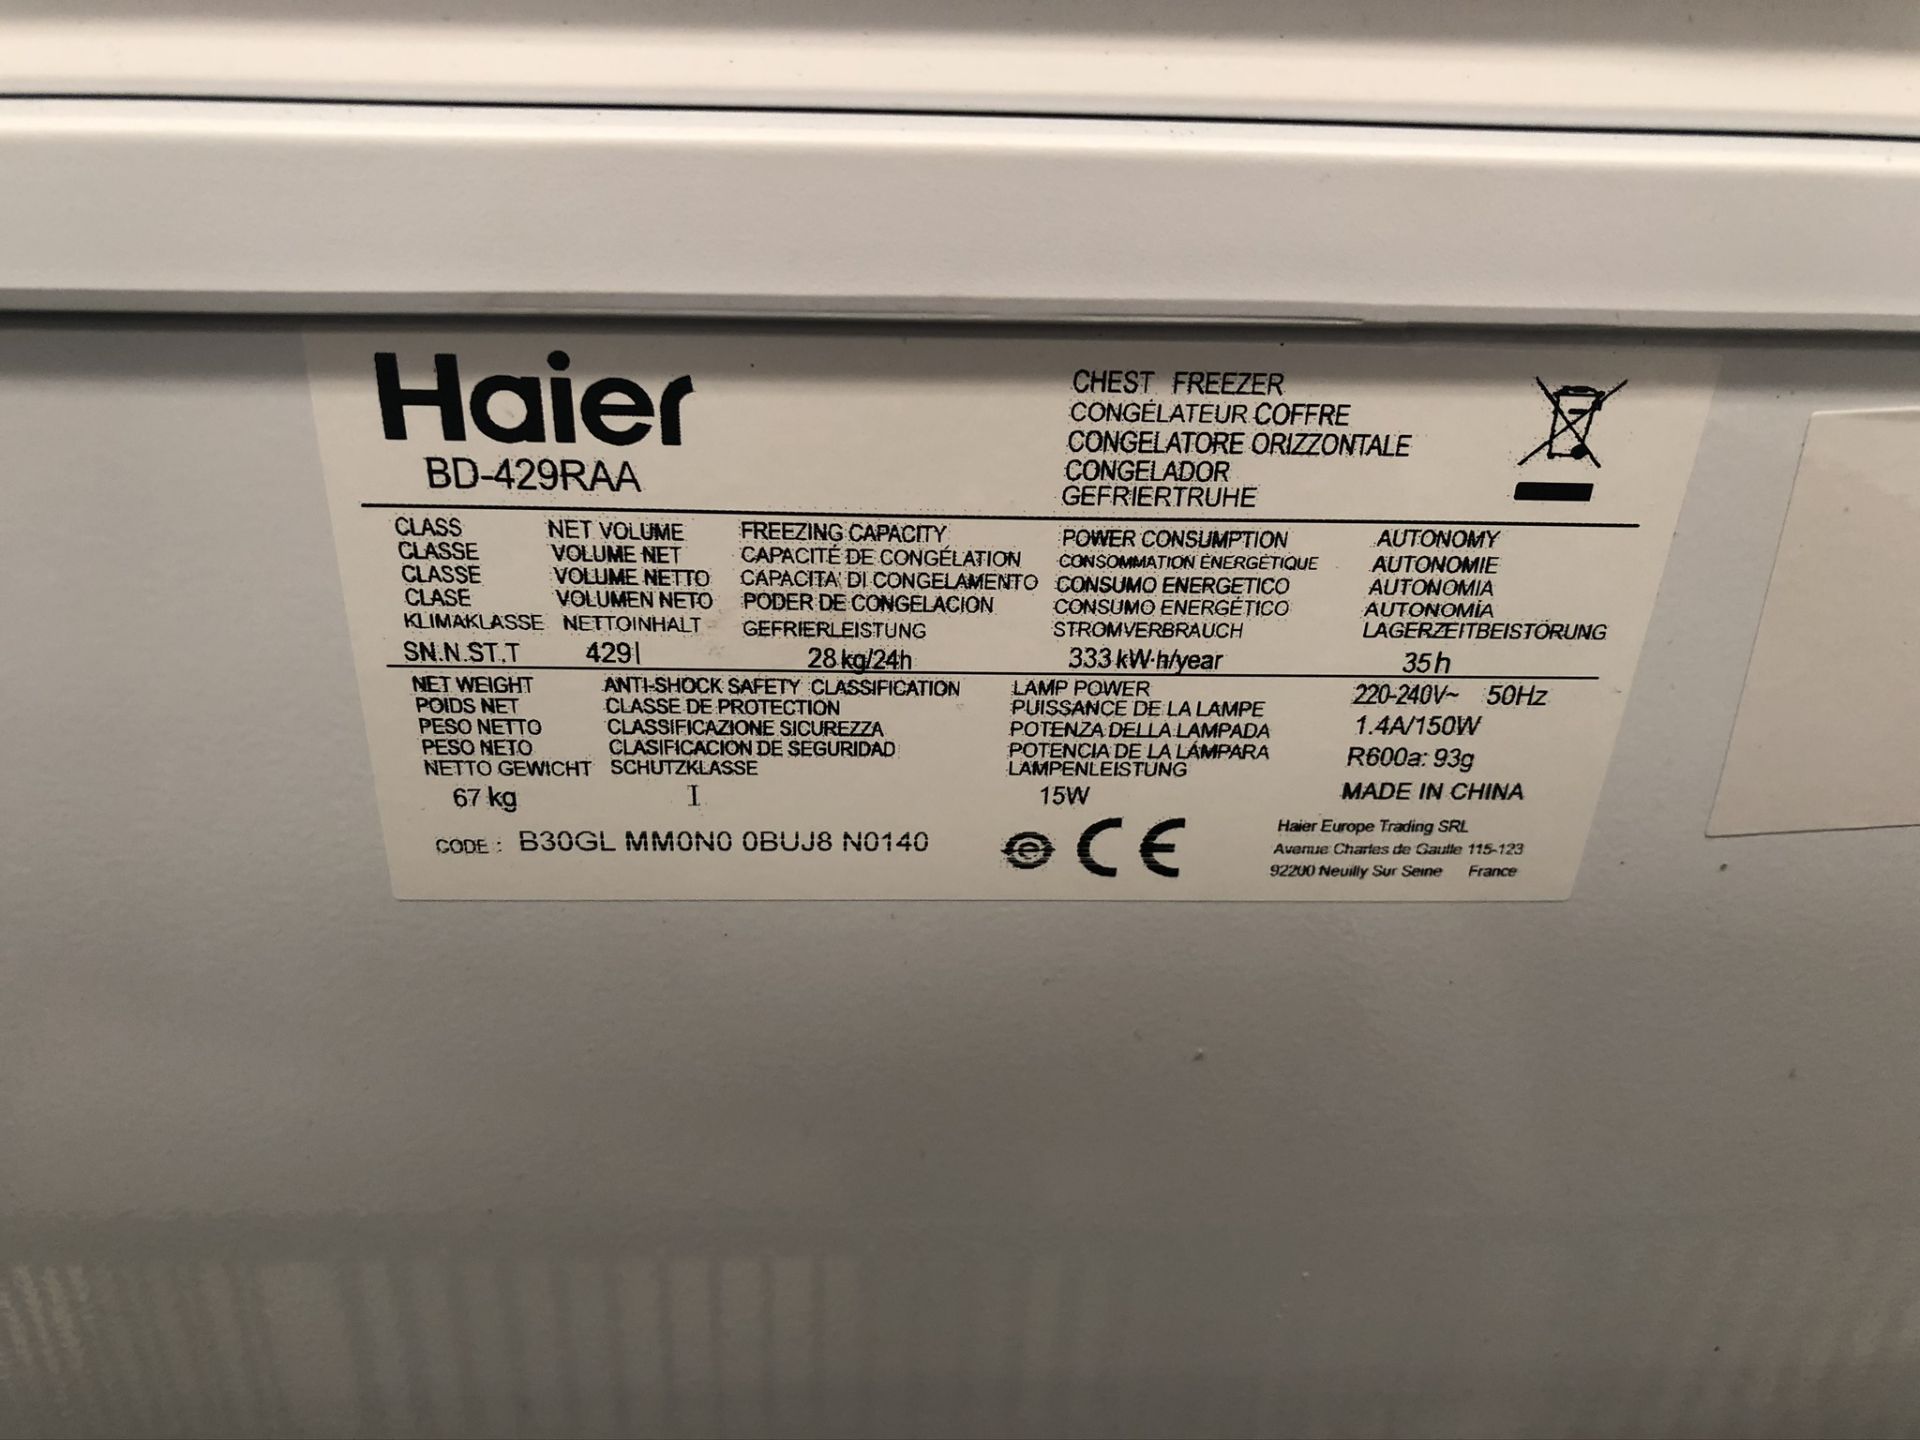 Haier BD-429RAA Chest Freezer - Image 4 of 4